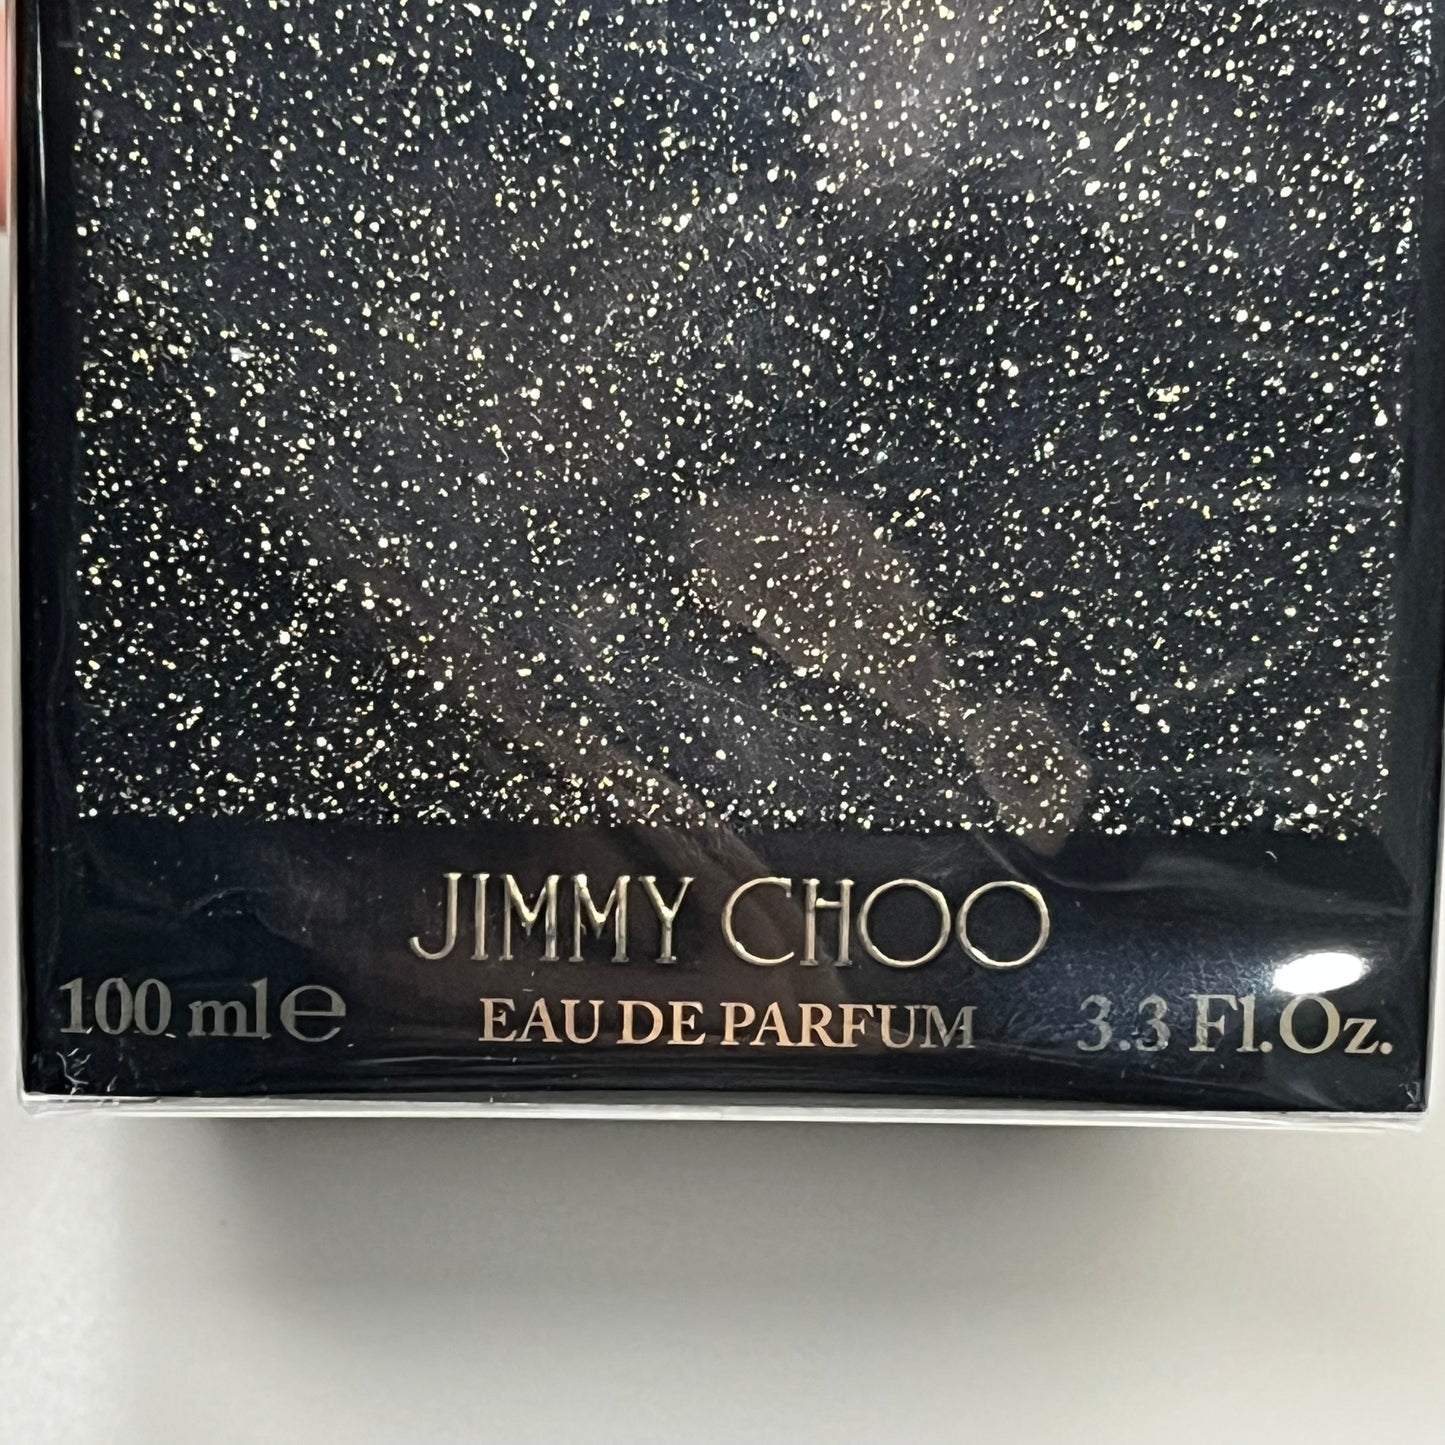 JIMMY CHOO I Want Choo Forever Women's Parfum 3.3 Fl oz. Black 24M36M215 (New)